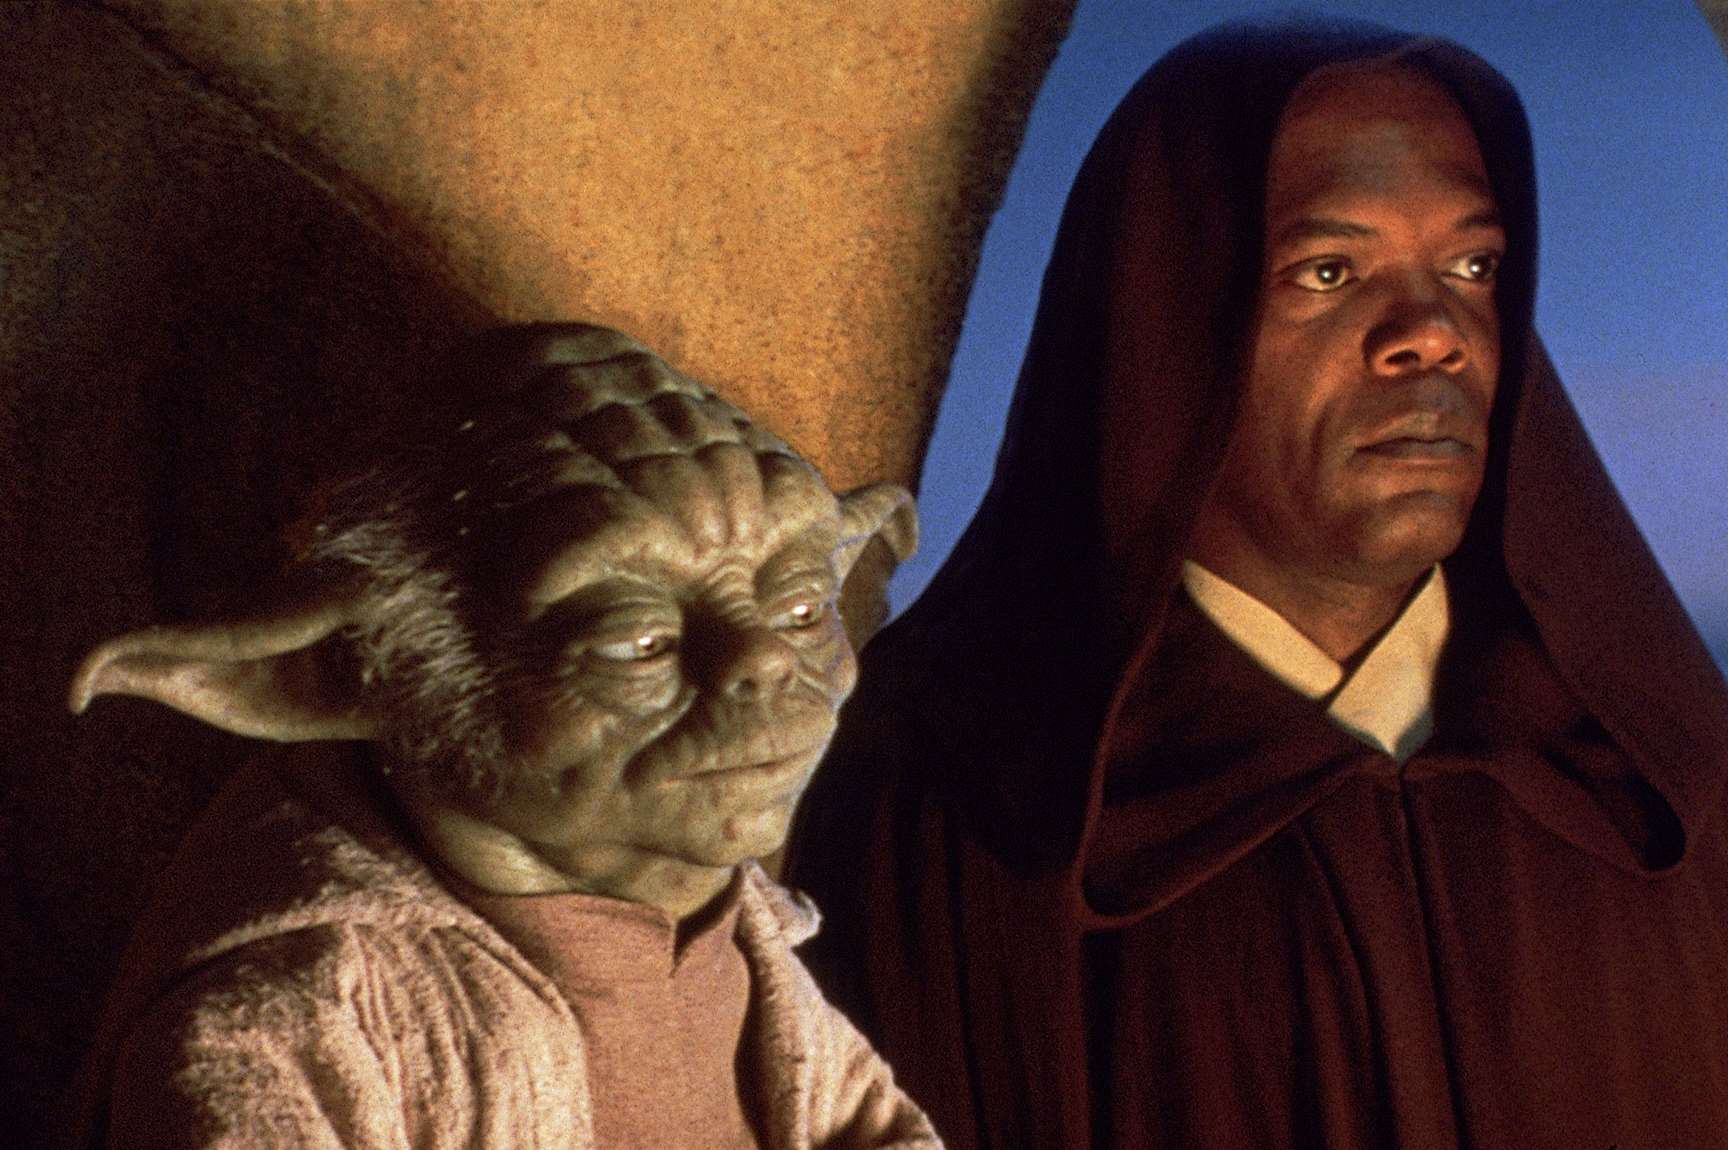 Jedi Masters Yoda and Mace Windu (Samuel L Jackson) ponder in The Phantom Menace. Picture: Lucasfilm Ltd